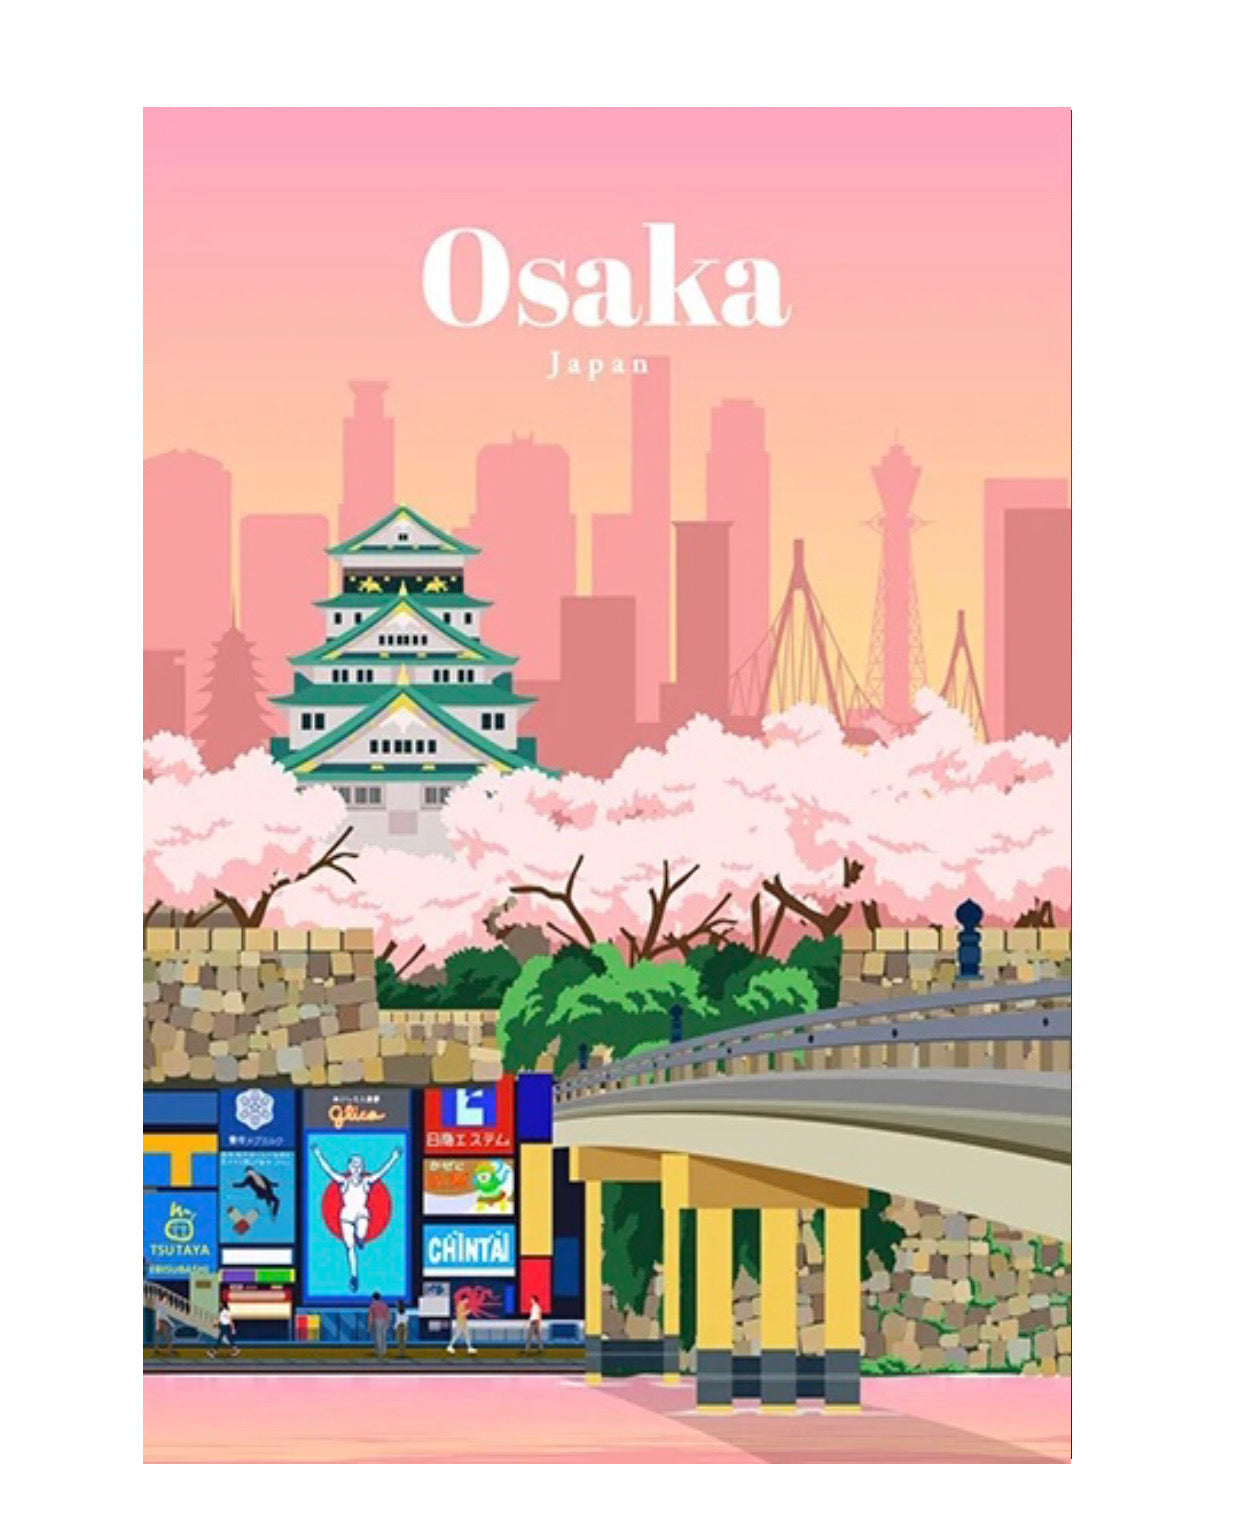 osaka, japan travel poster